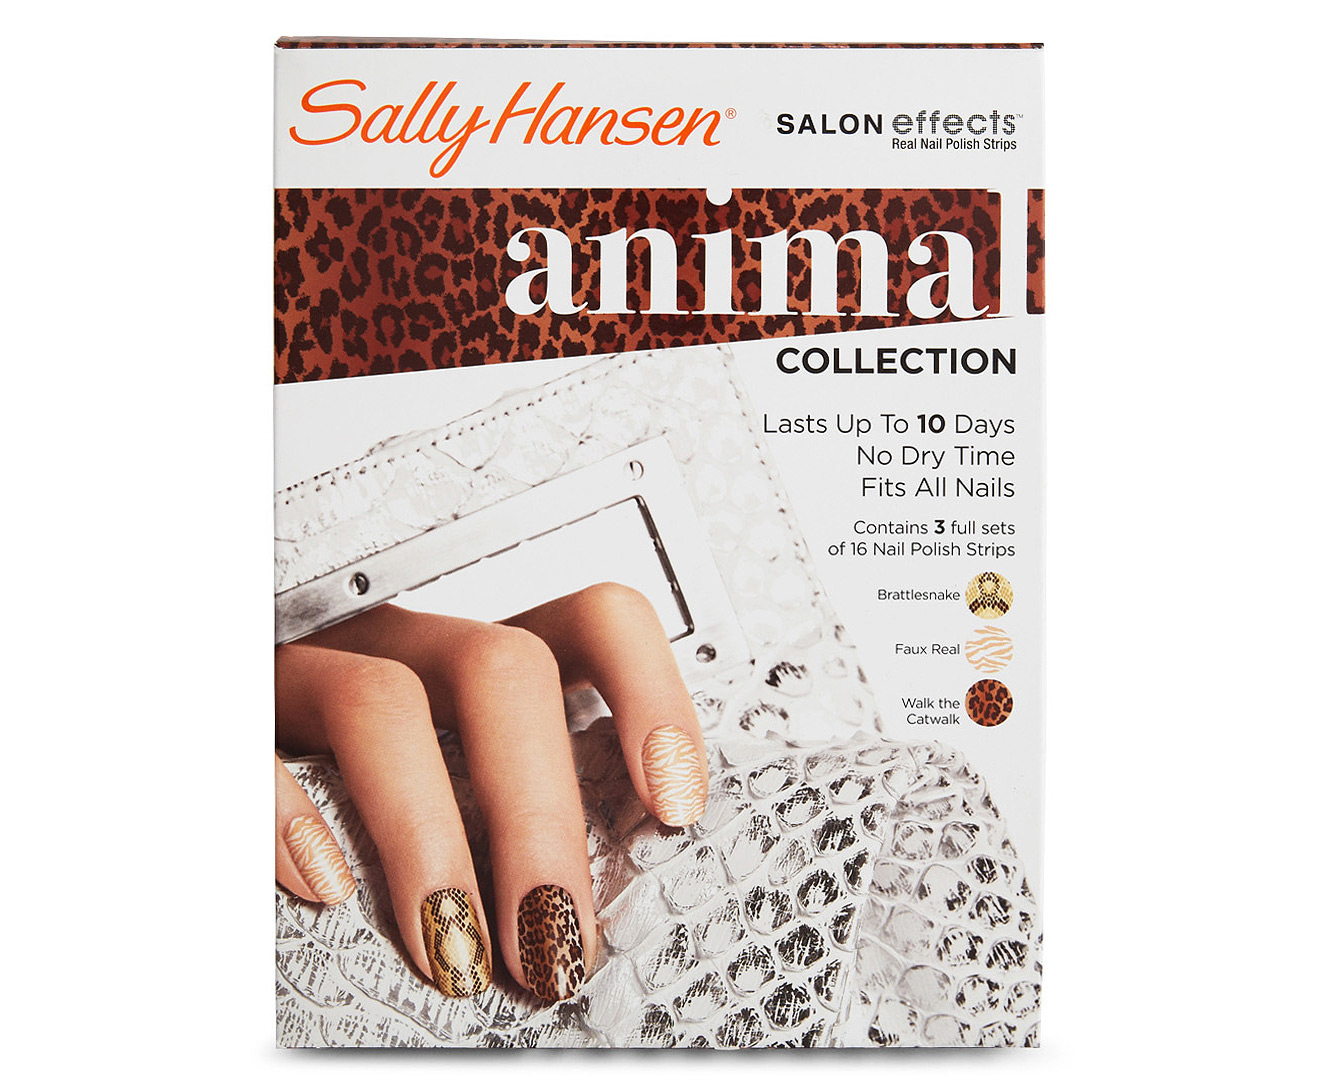 Sally Hansen Salon Effects Real Nail Polish Strips - wide 1